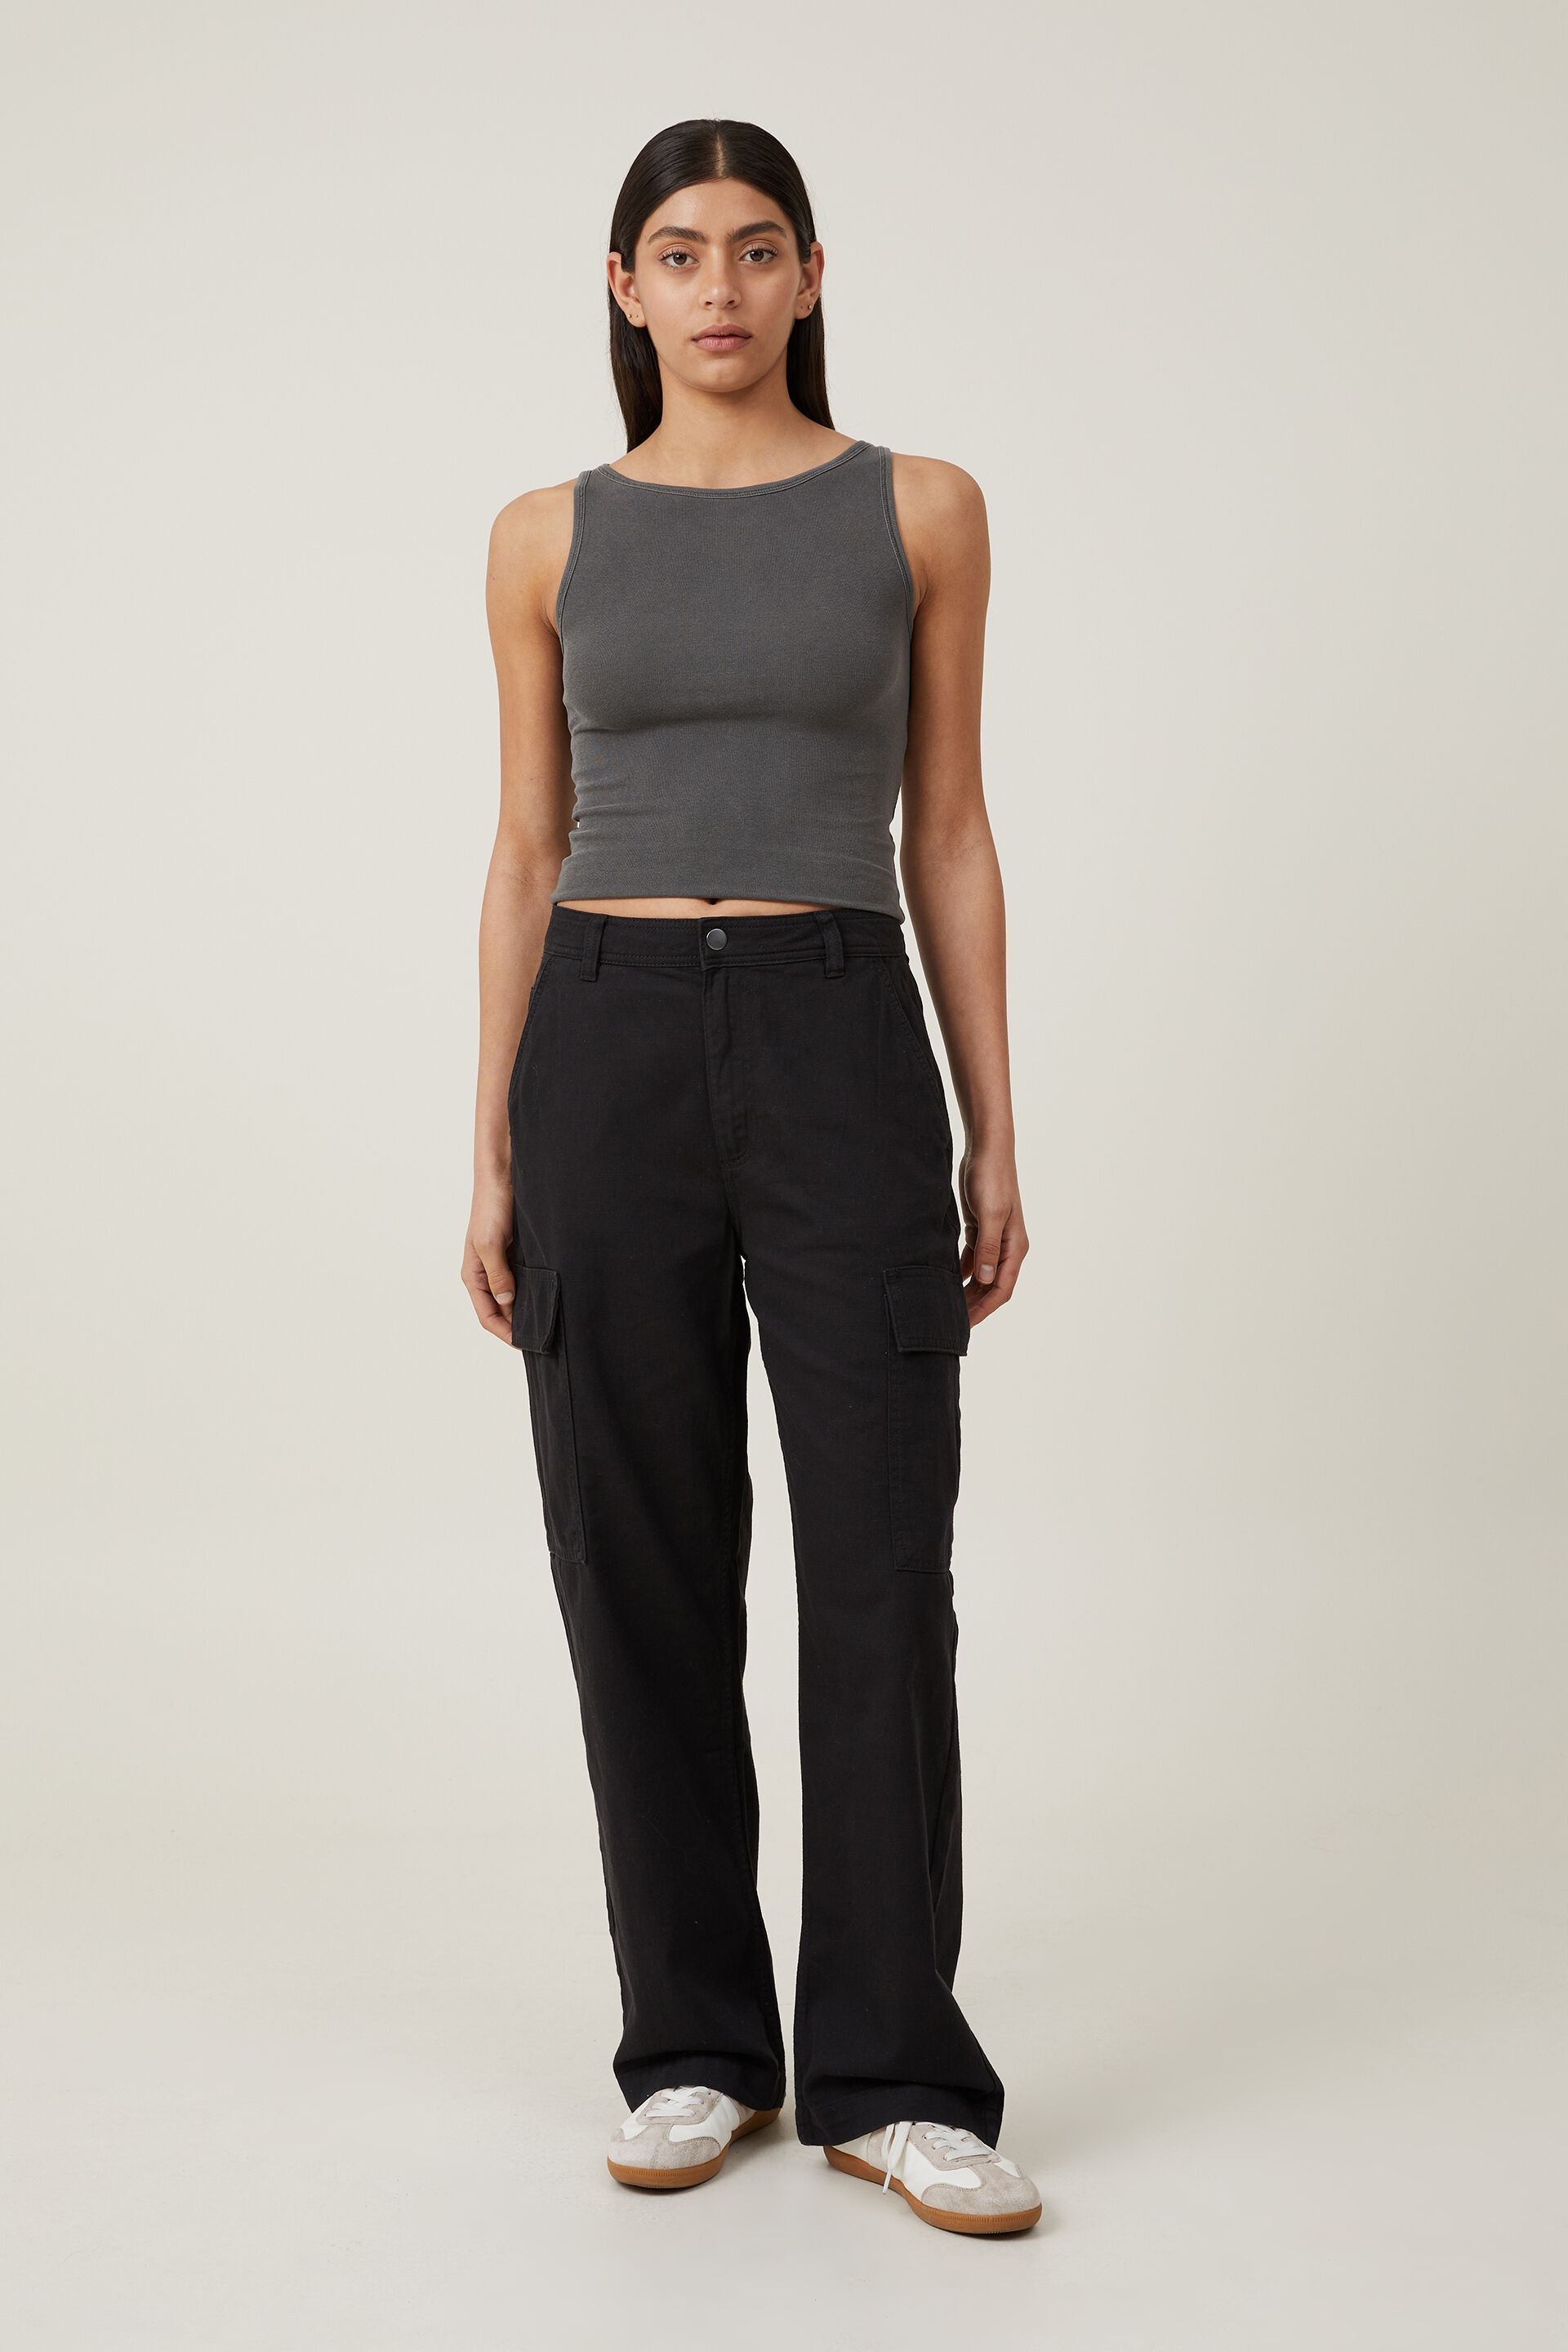 Buy SSoShHub WomenGirl Cotton Regular Fit 6 Pocket Cargo Pants Regular Fit  Black at Amazonin